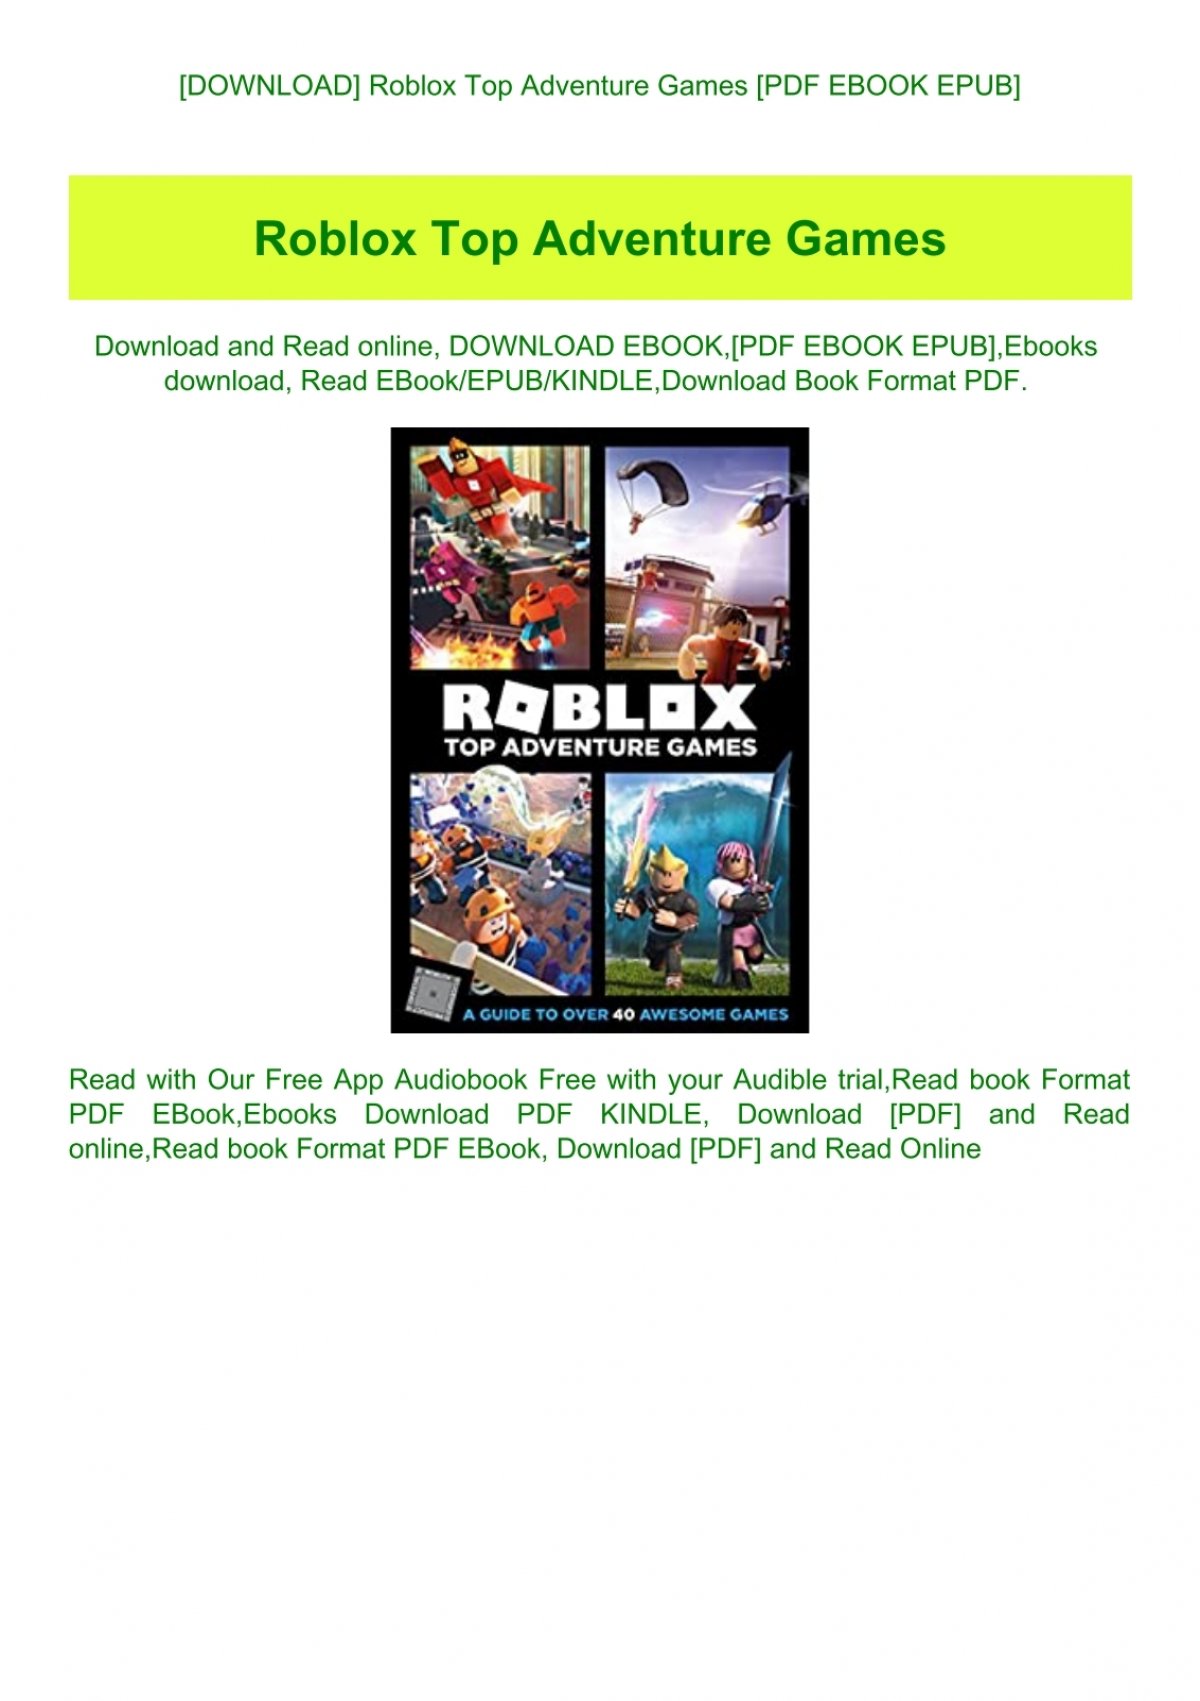 Download Roblox Top Adventure Games Pdf Ebook Epub - download pdf roblox top adventure games by roblox free epub